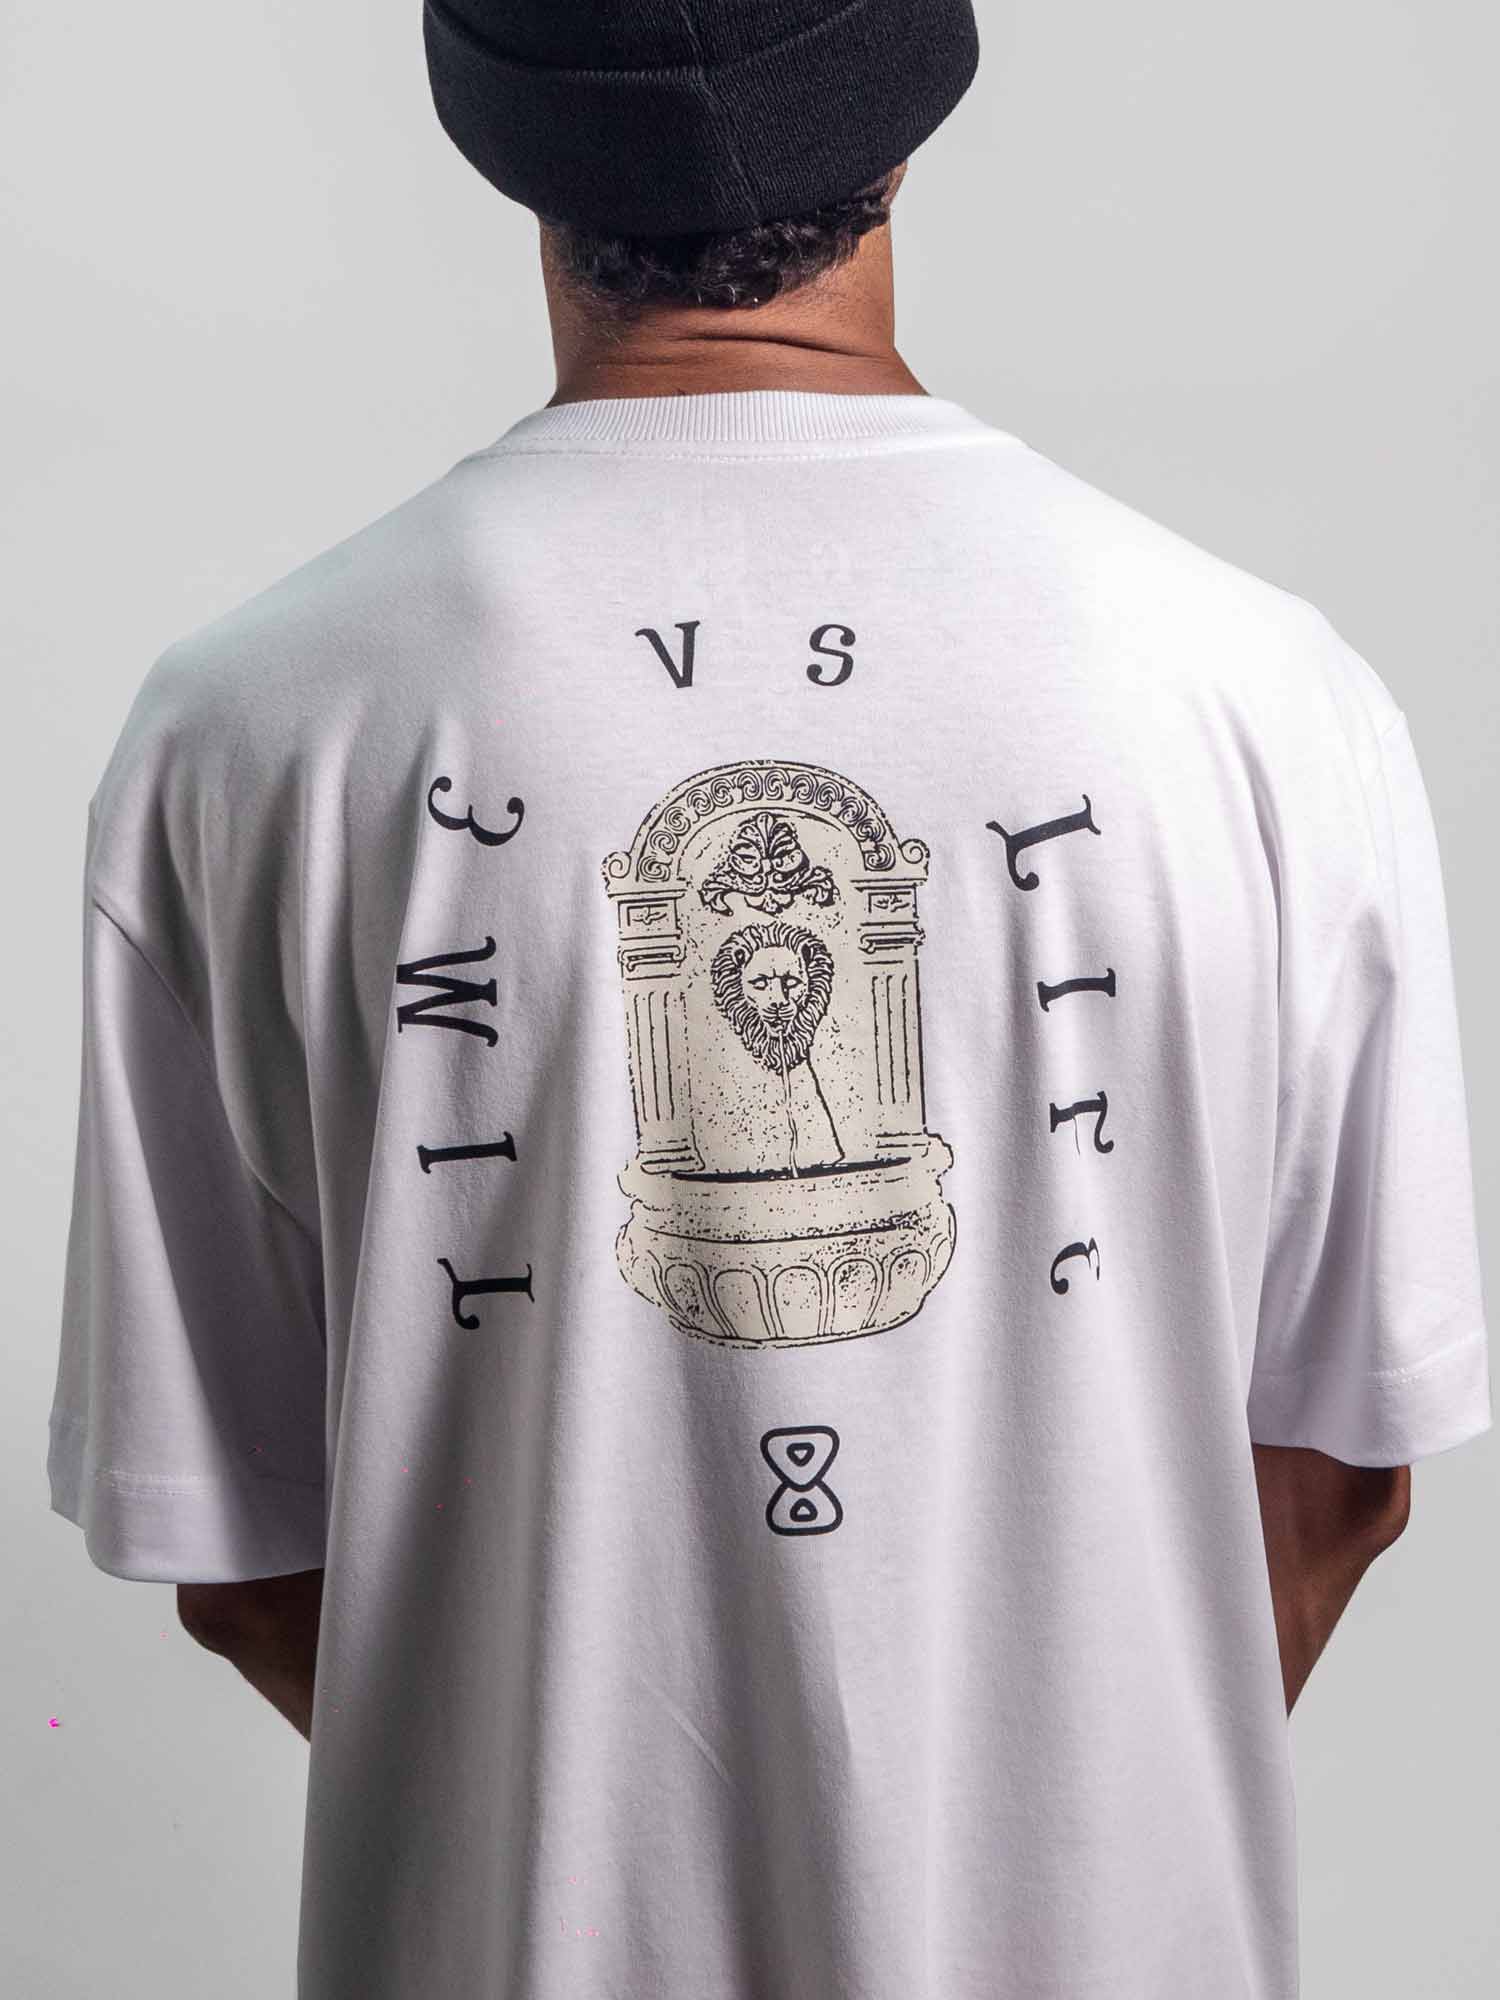     Camiseta-Future-Time-Vs-Life-Branca-Costas-Corpo